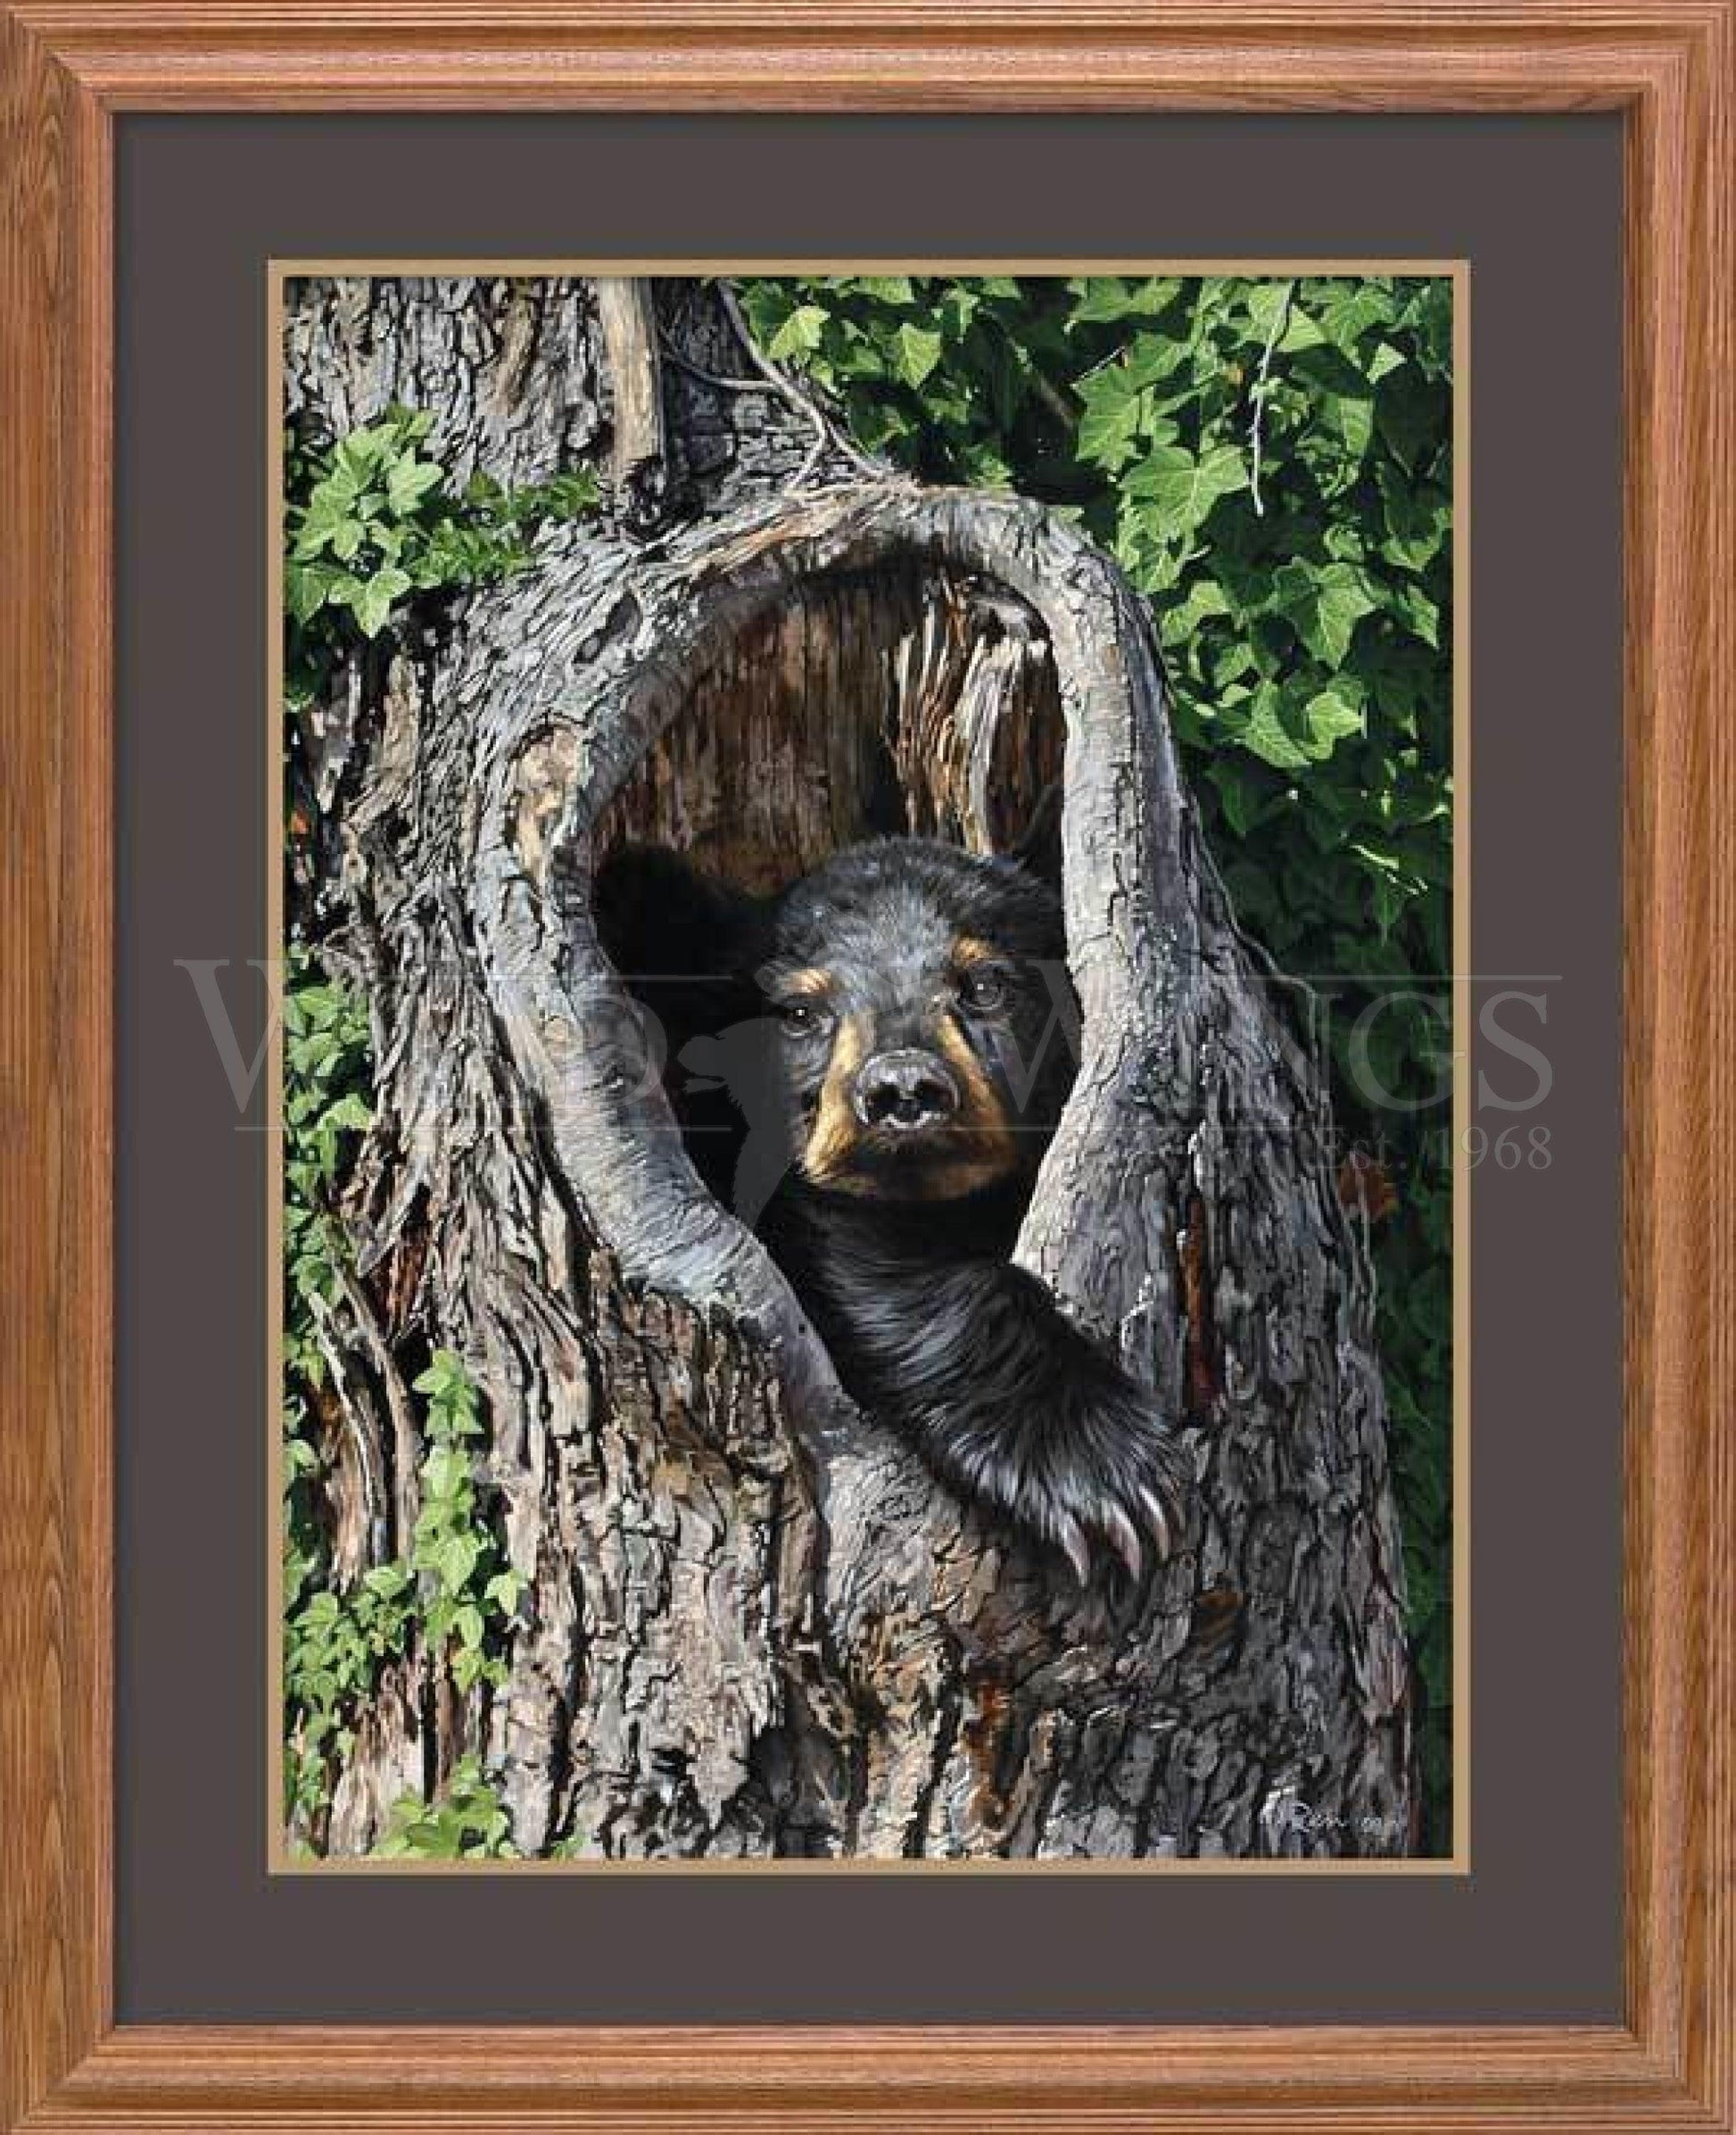 cubby-holemdashblack-bear-gna-premium-framed-print31h-x-25w-art-collection_541.jpg